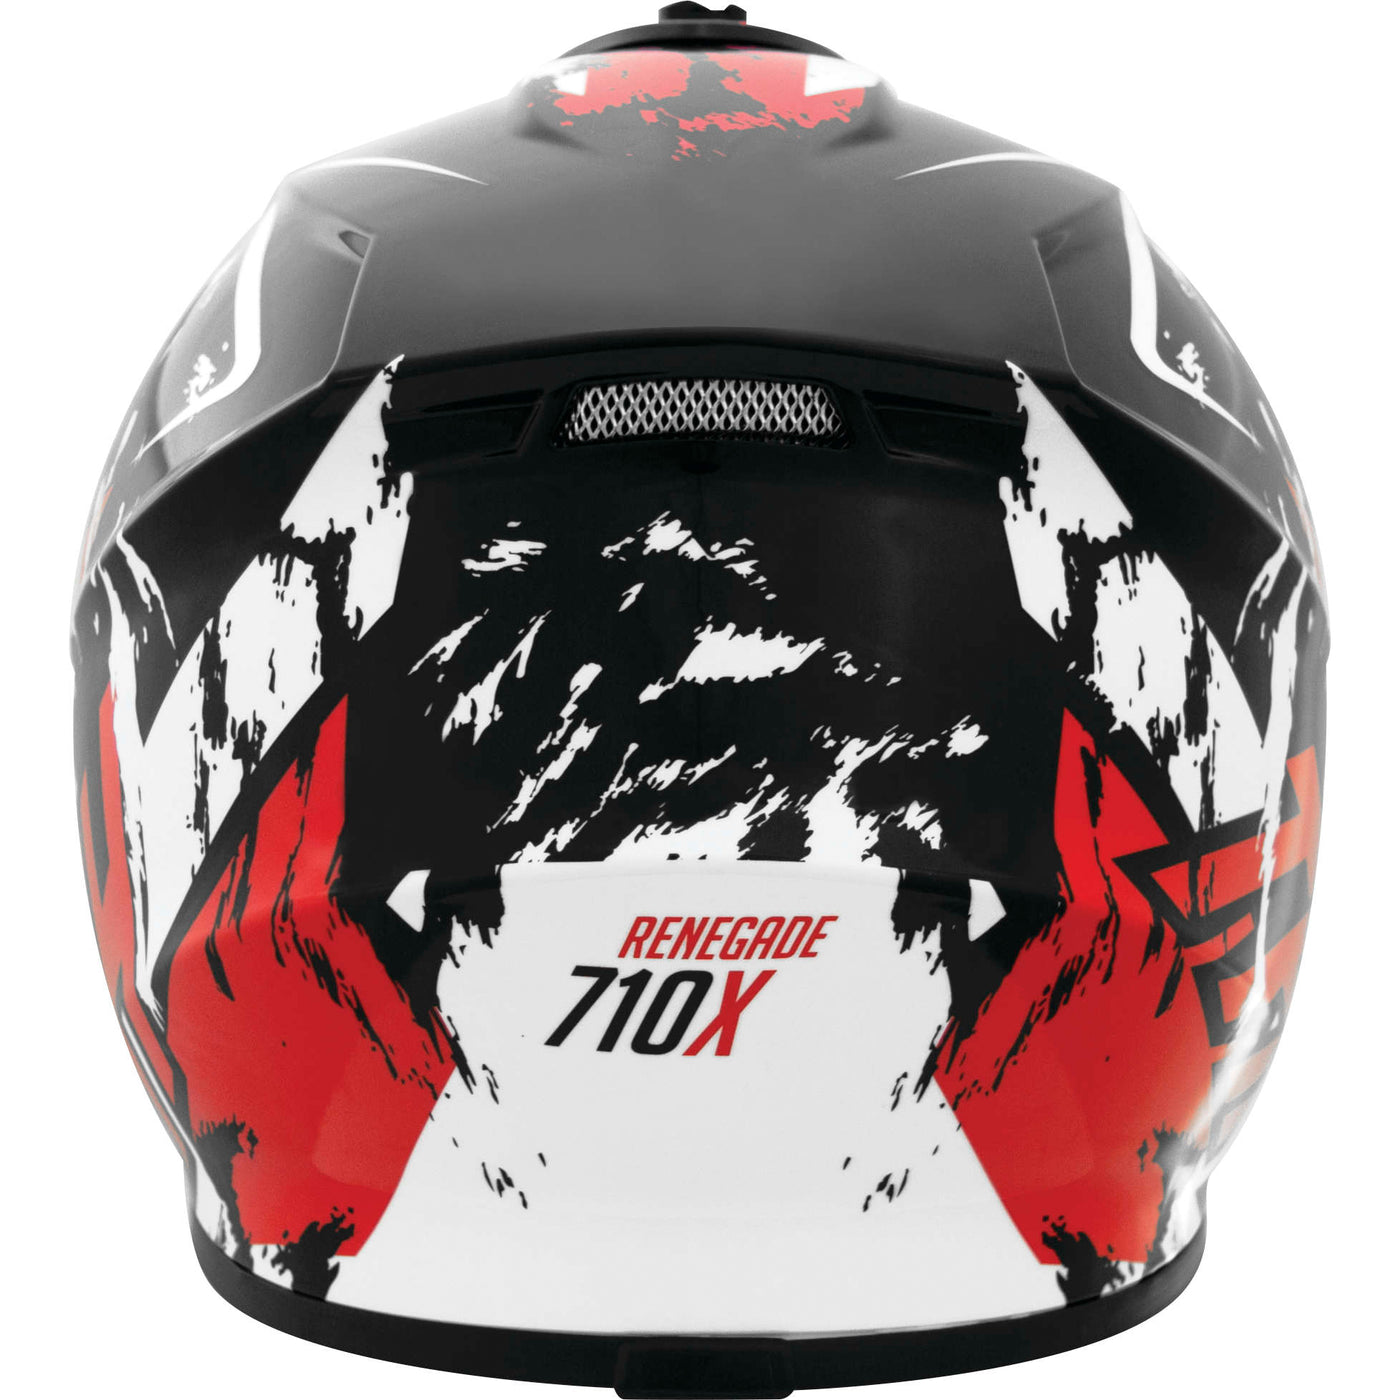 Thh T710X Renegade Helmet